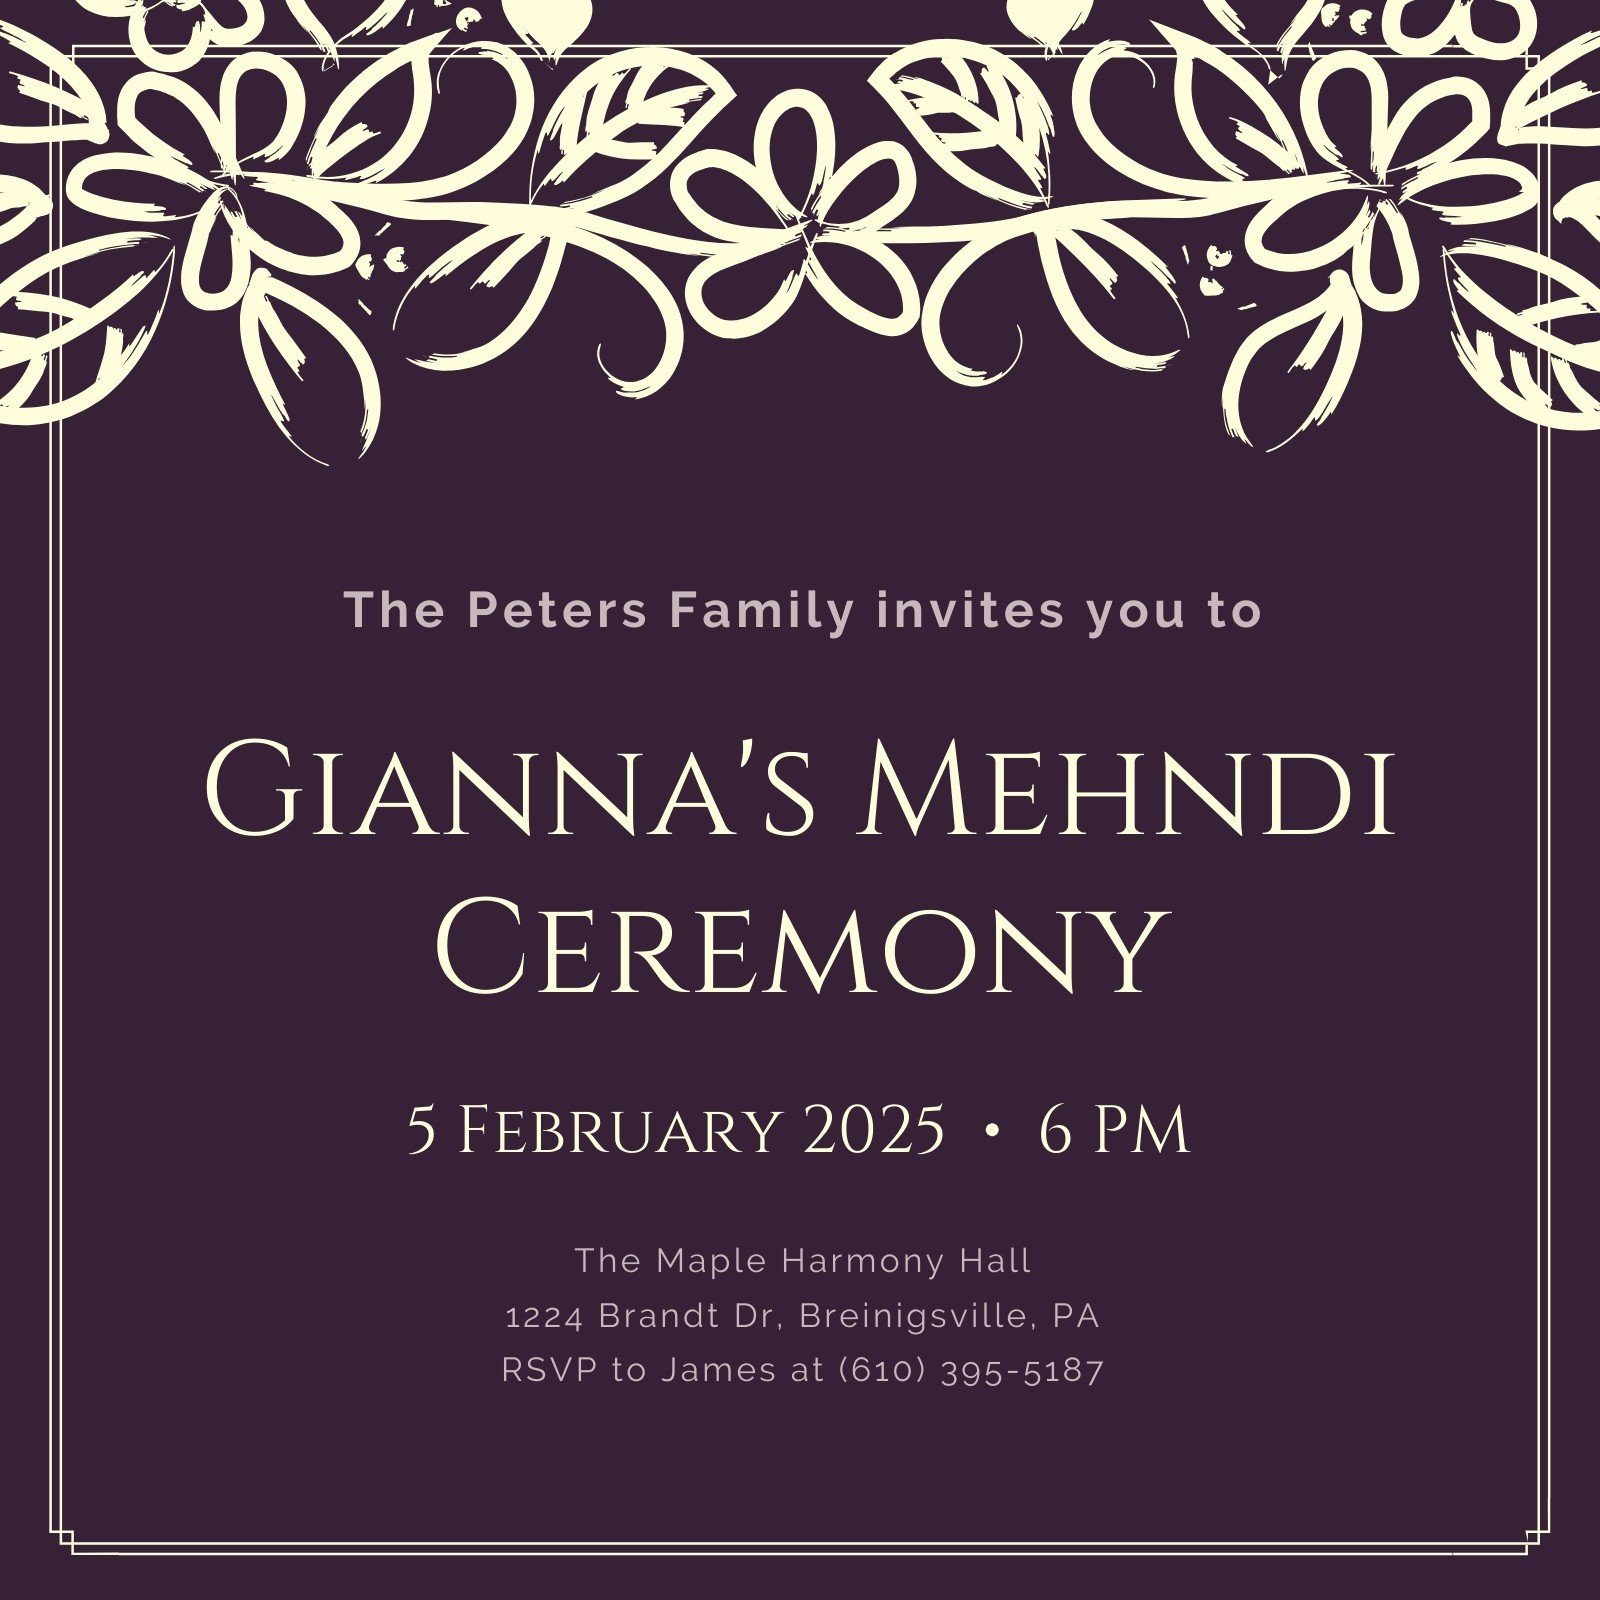 Wedding Invitation Wording For Mehndi Ceremony | Wedding invitation card  wording, Wedding card wordings, Indian wedding invitation cards